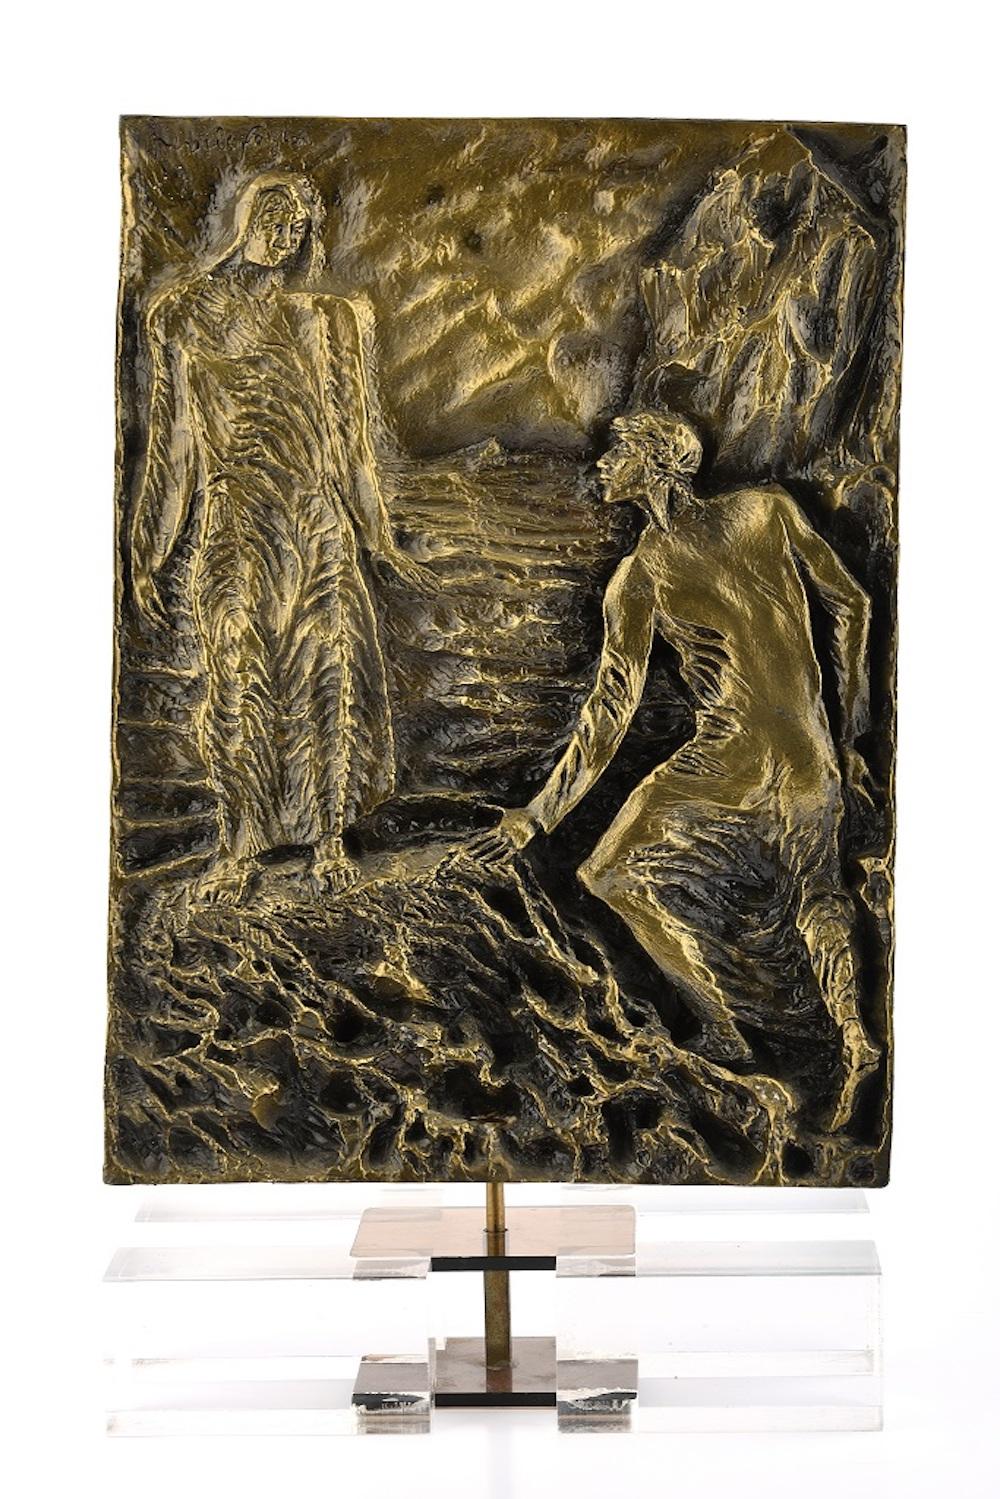 Pericle Fazzini Figurative Sculpture - Dante Meets Virgil - Original Bronze Sculpture by P. Fazzini - Late 20th Century